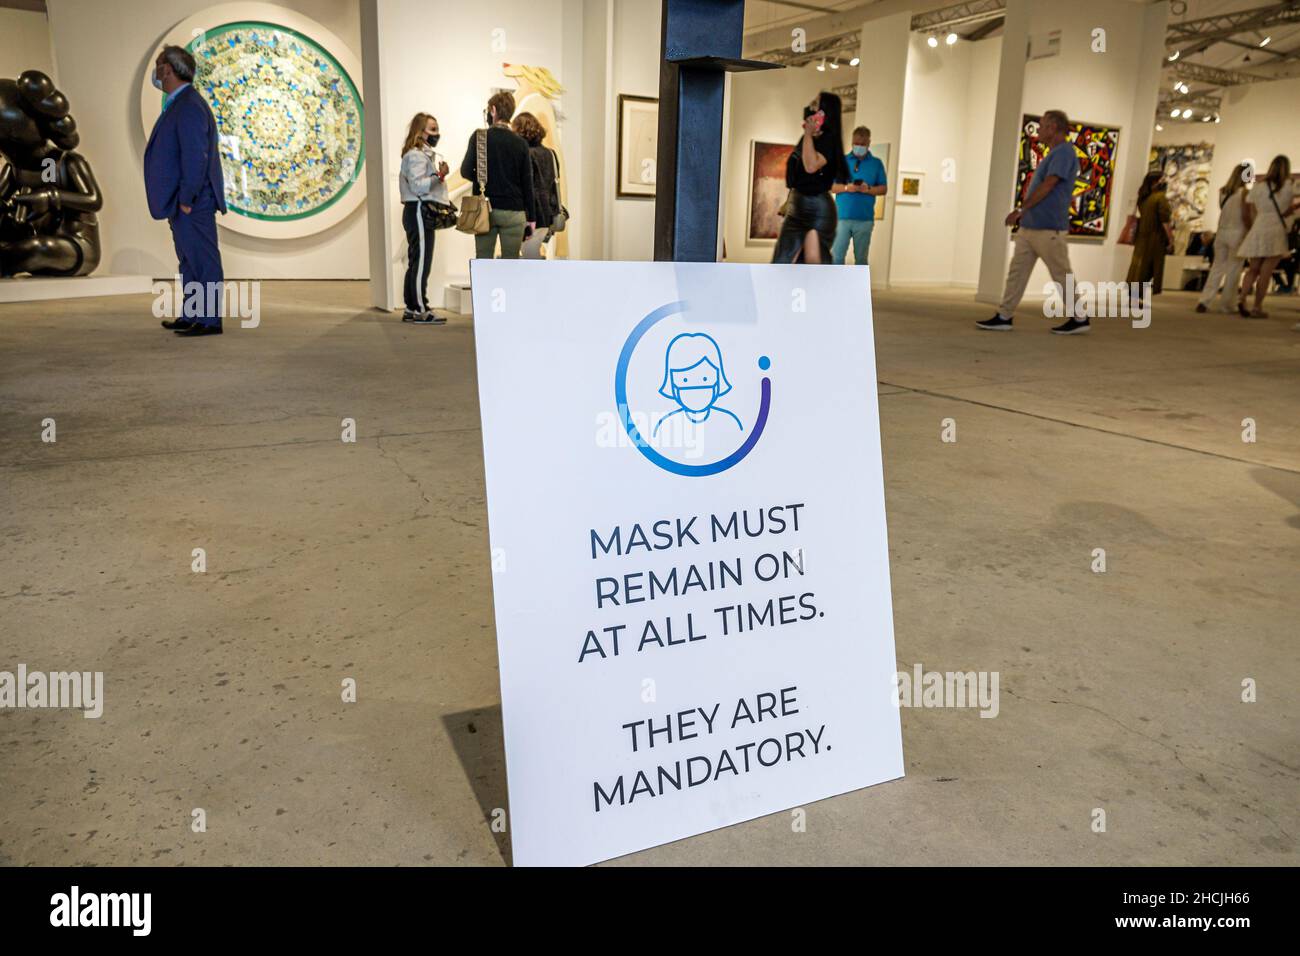 Miami Florida Art Basel Week CONTEXT Art Miami show shows sign notice face mask masks mandatory remain on Stock Photo